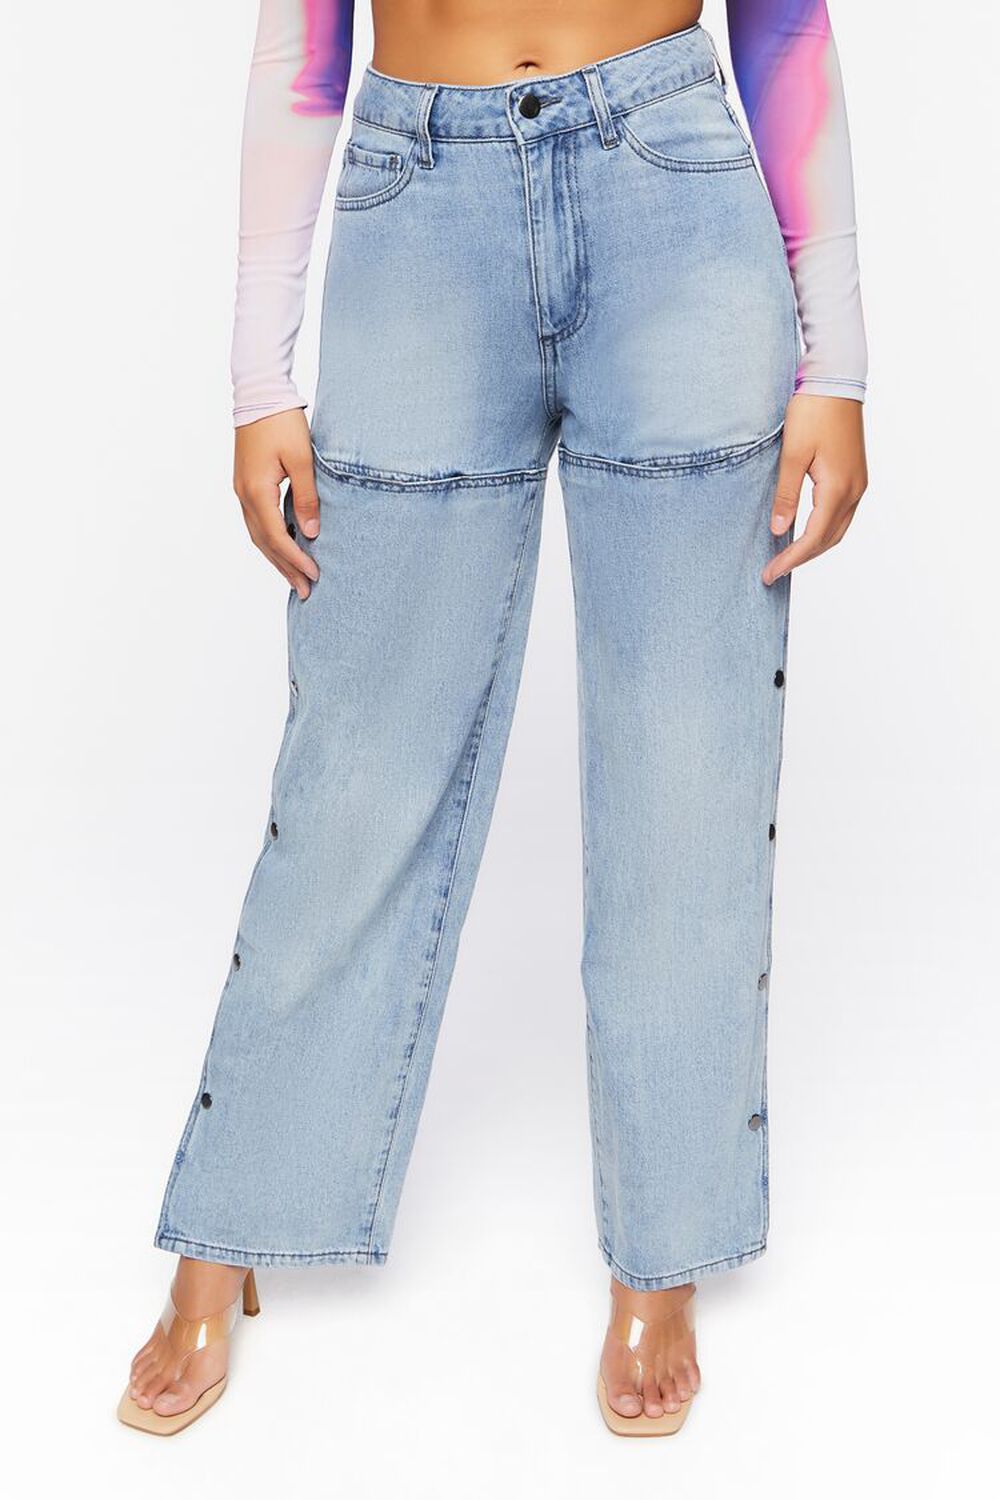 MEDIUM DENIM Mid-Rise Cutout Jeans, image 2